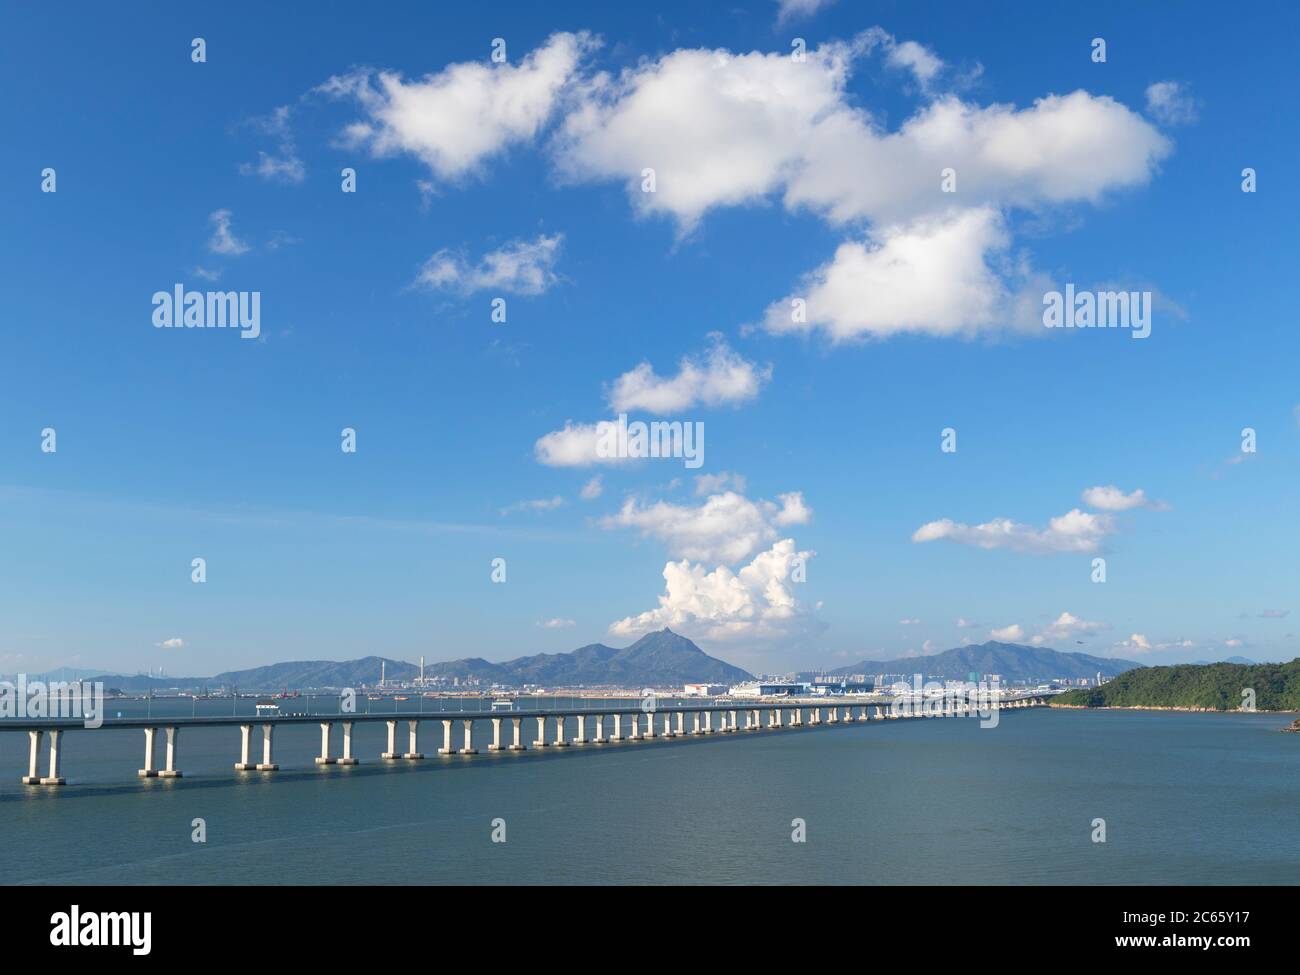 Hong Kong-Zhuhai-Macau bridge and Hong Kong International Airport, Lantau Island, Hong Kong Stock Photo